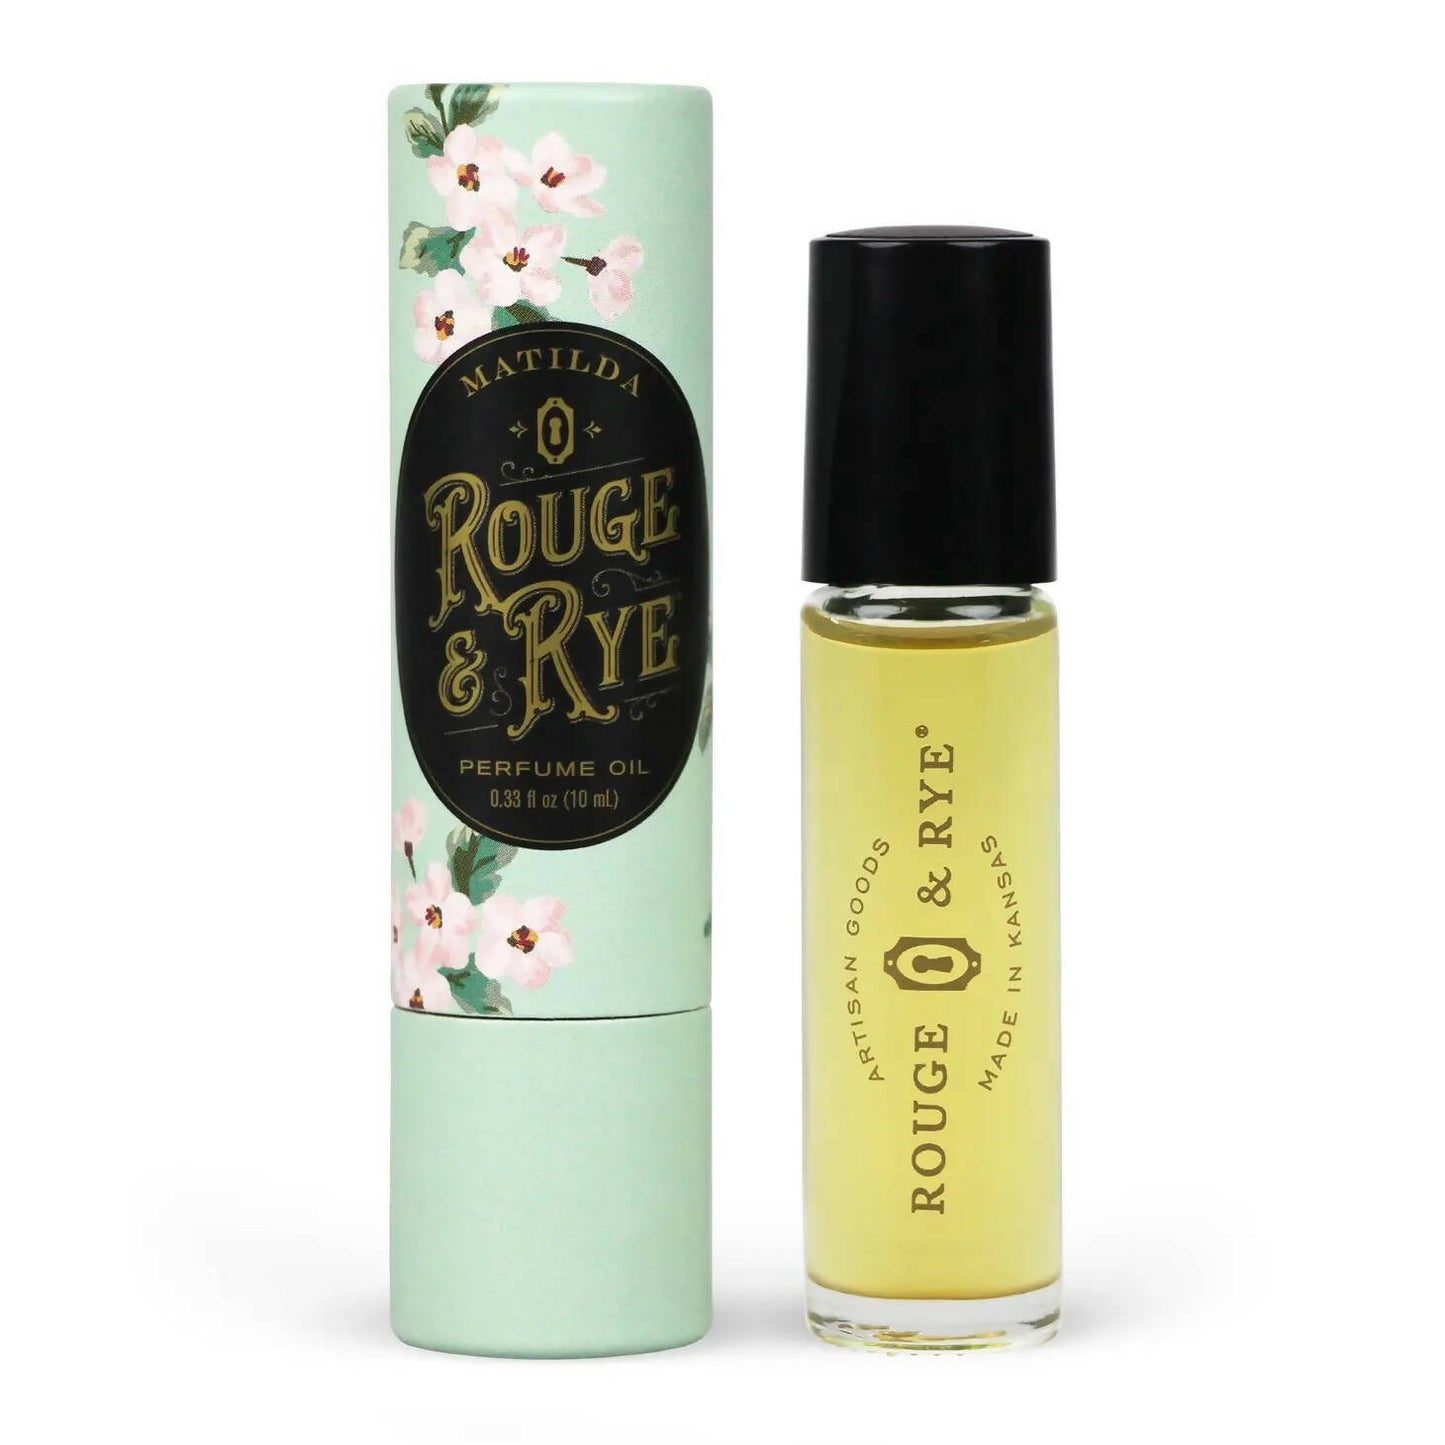 Rouge & Rye Perfume Oil